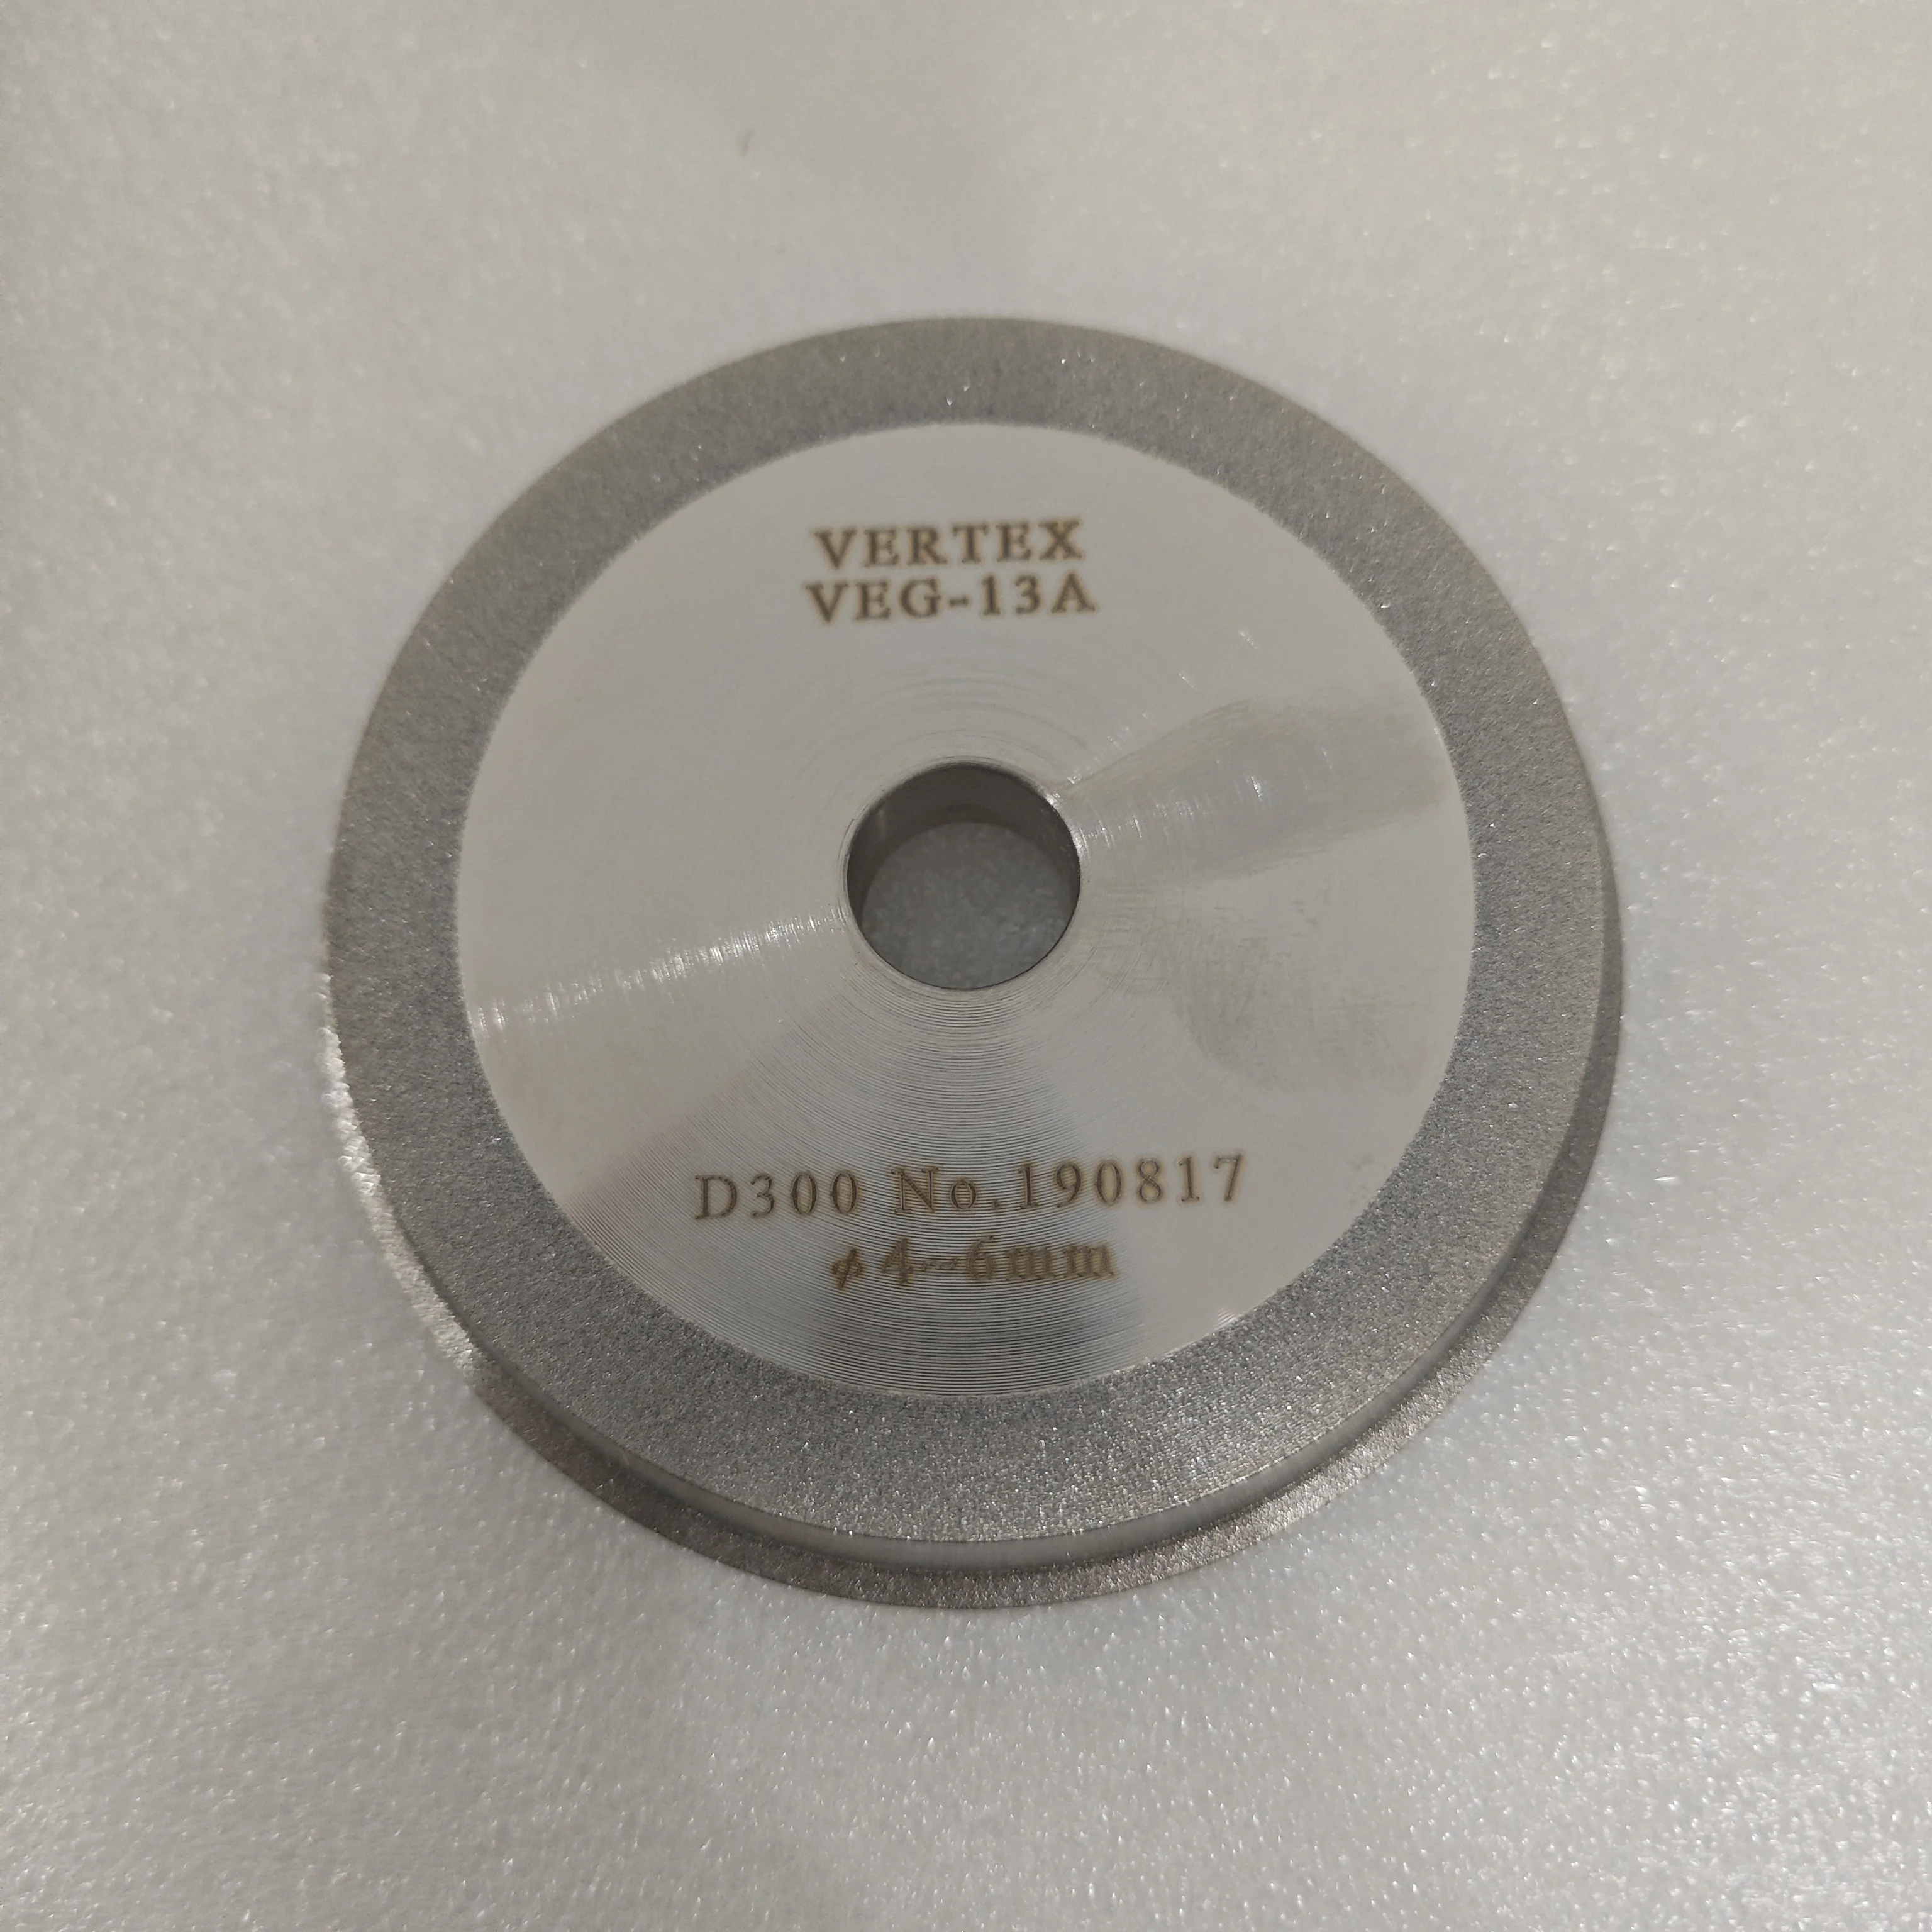 CBN SDC 4-6mm 7-13mm Grinding Wheel for VERTEX VEG-13A PRECISION END MILL GRINDER